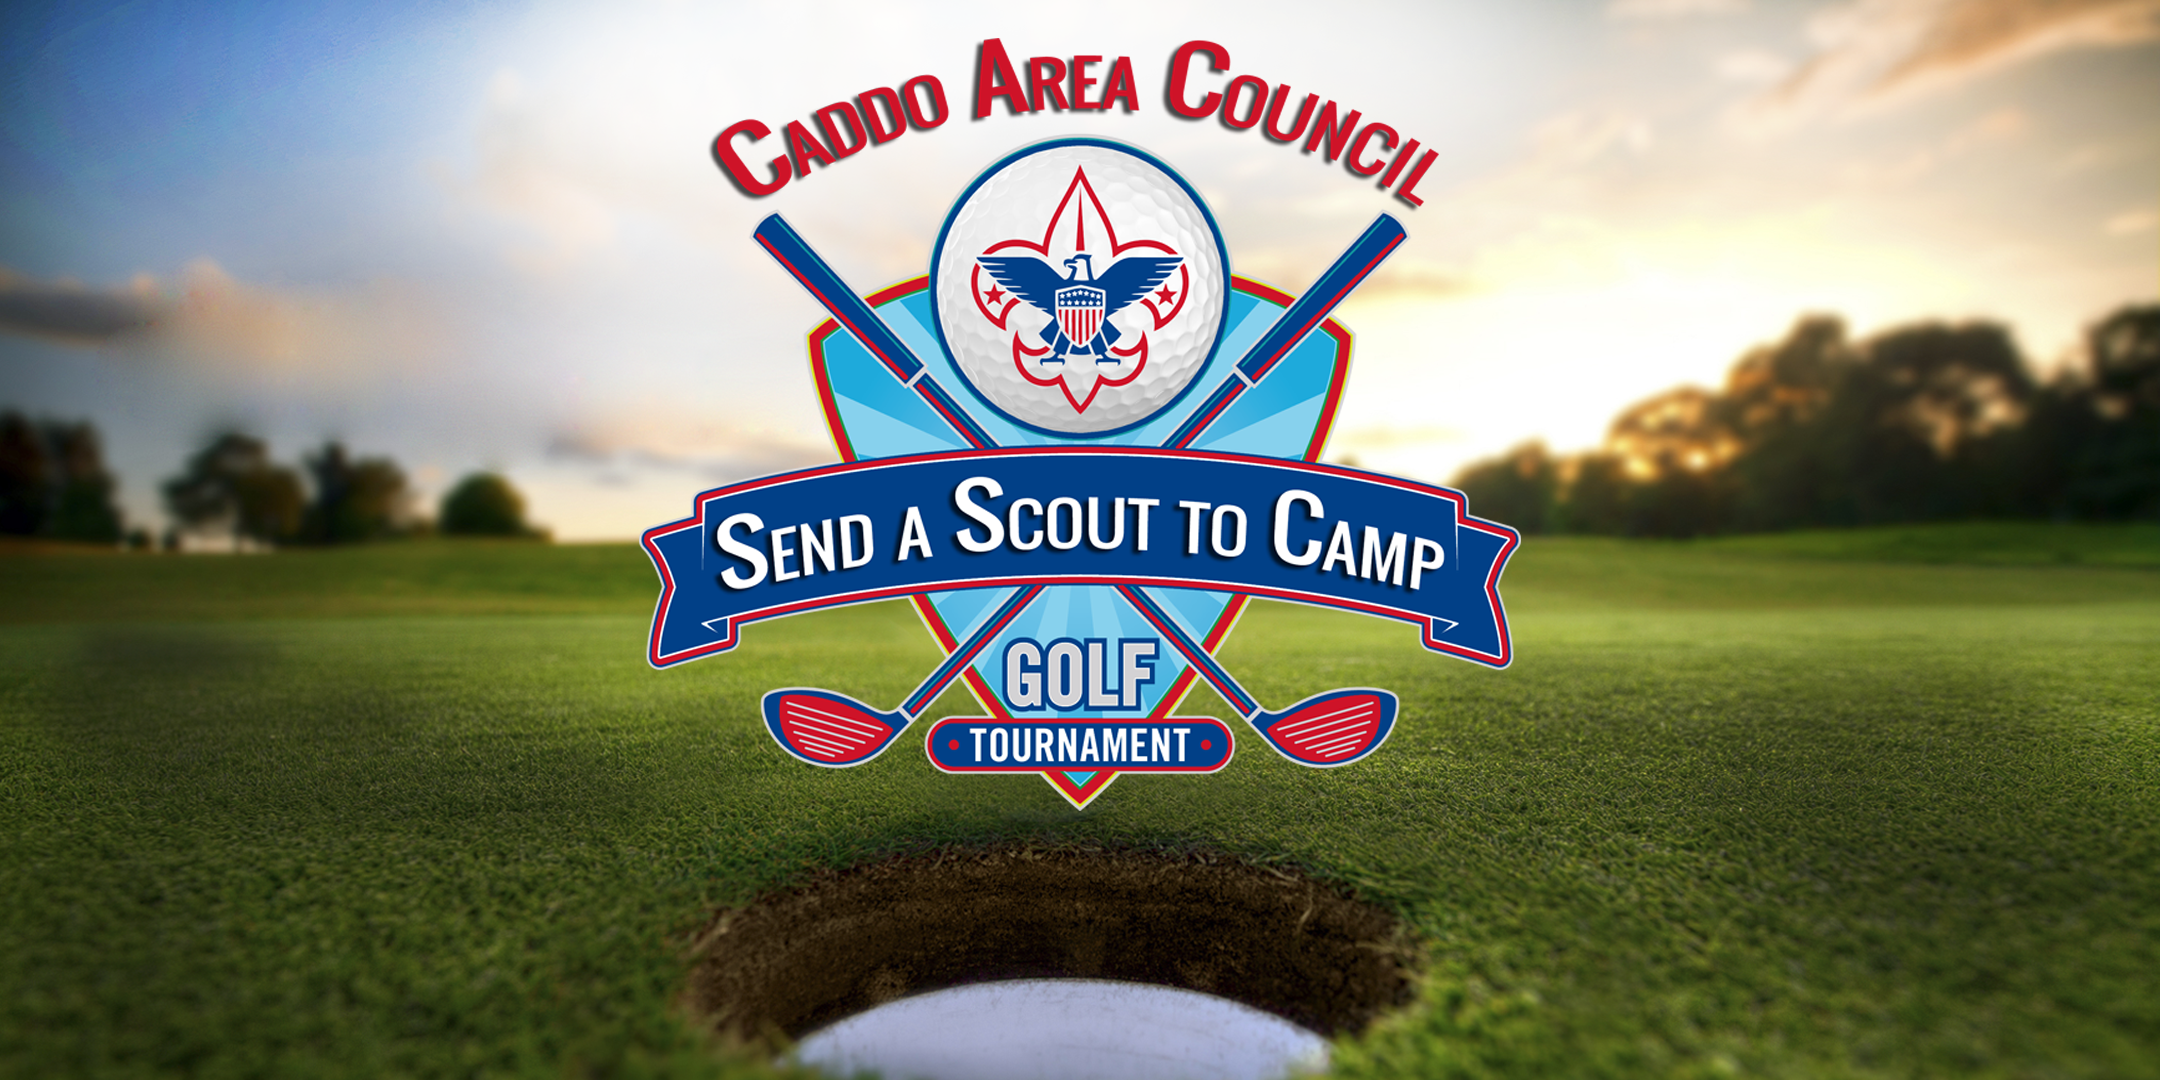 Caddo Area Council, "Send a Scout to Camp" Golf Tournament